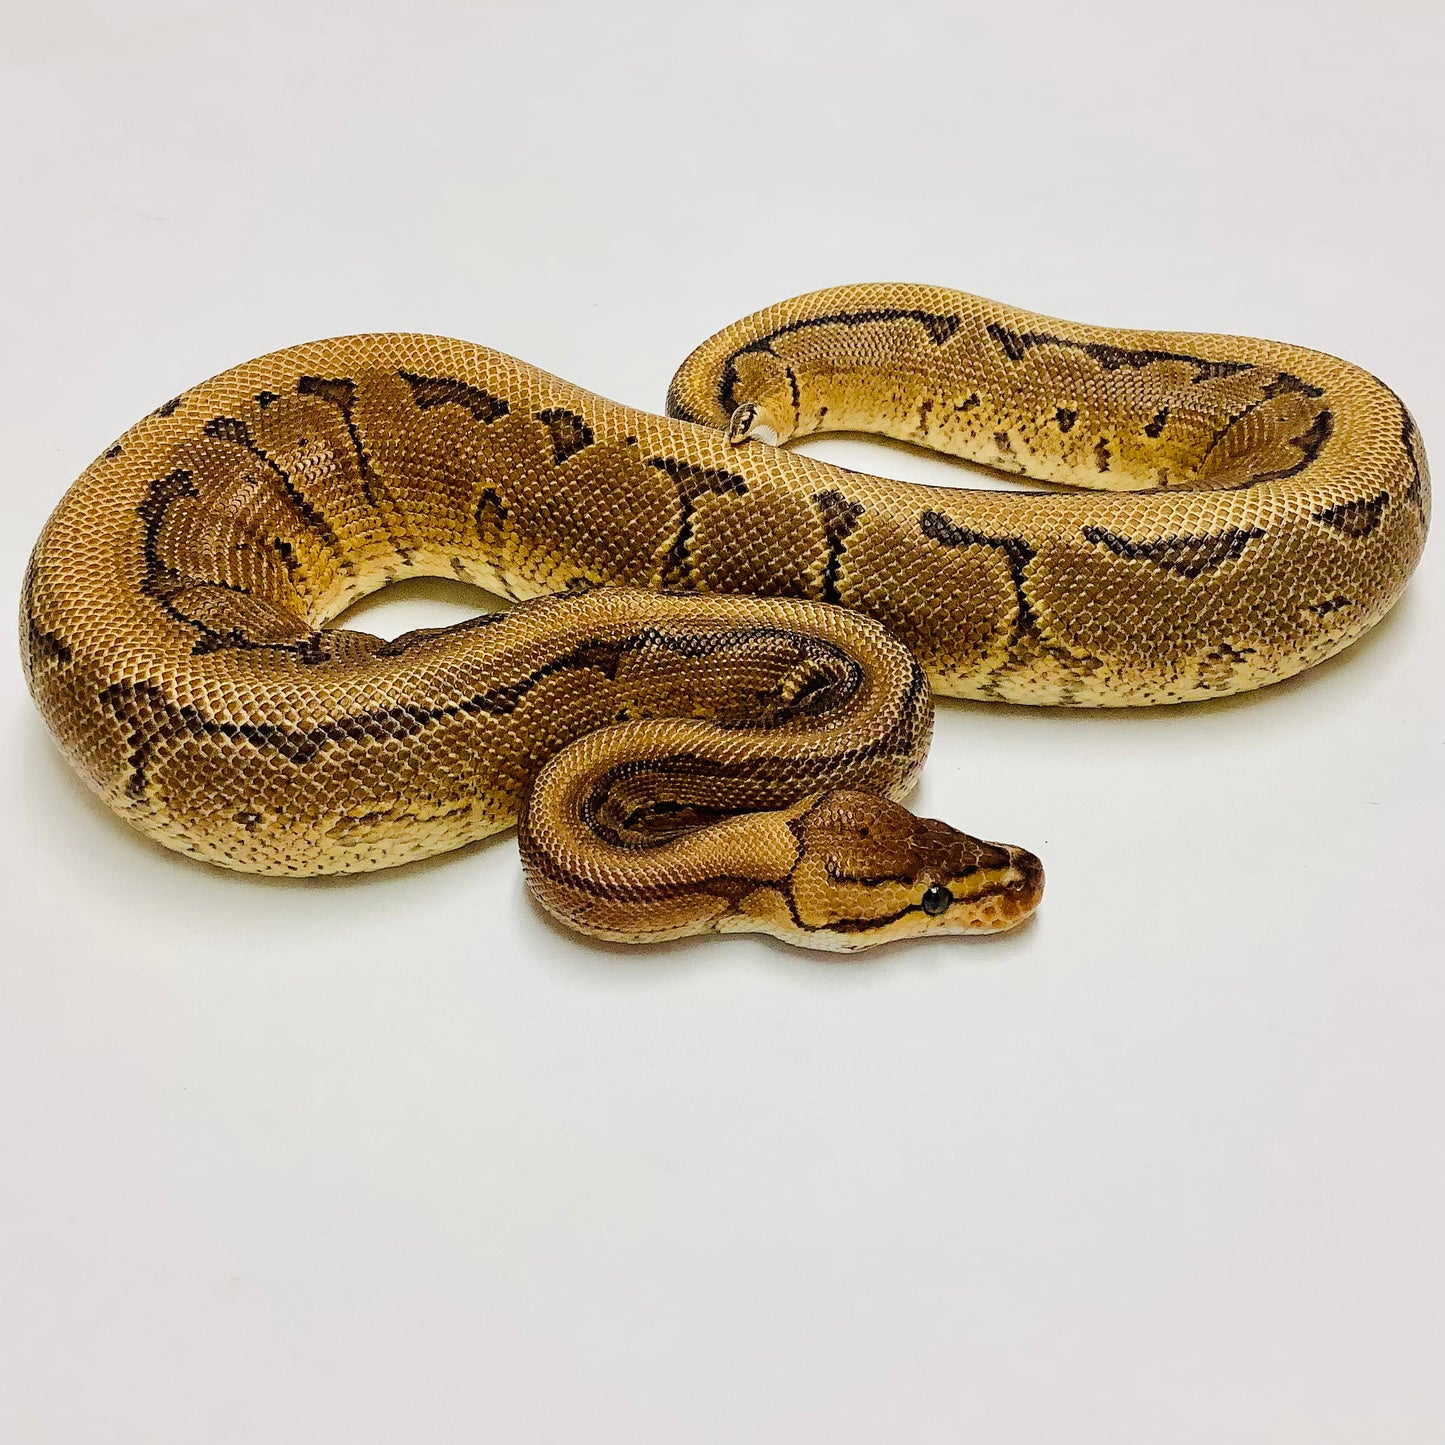 Pinstripe Red Stripe Yellowbelly Ball Python - Male #2021M01-1